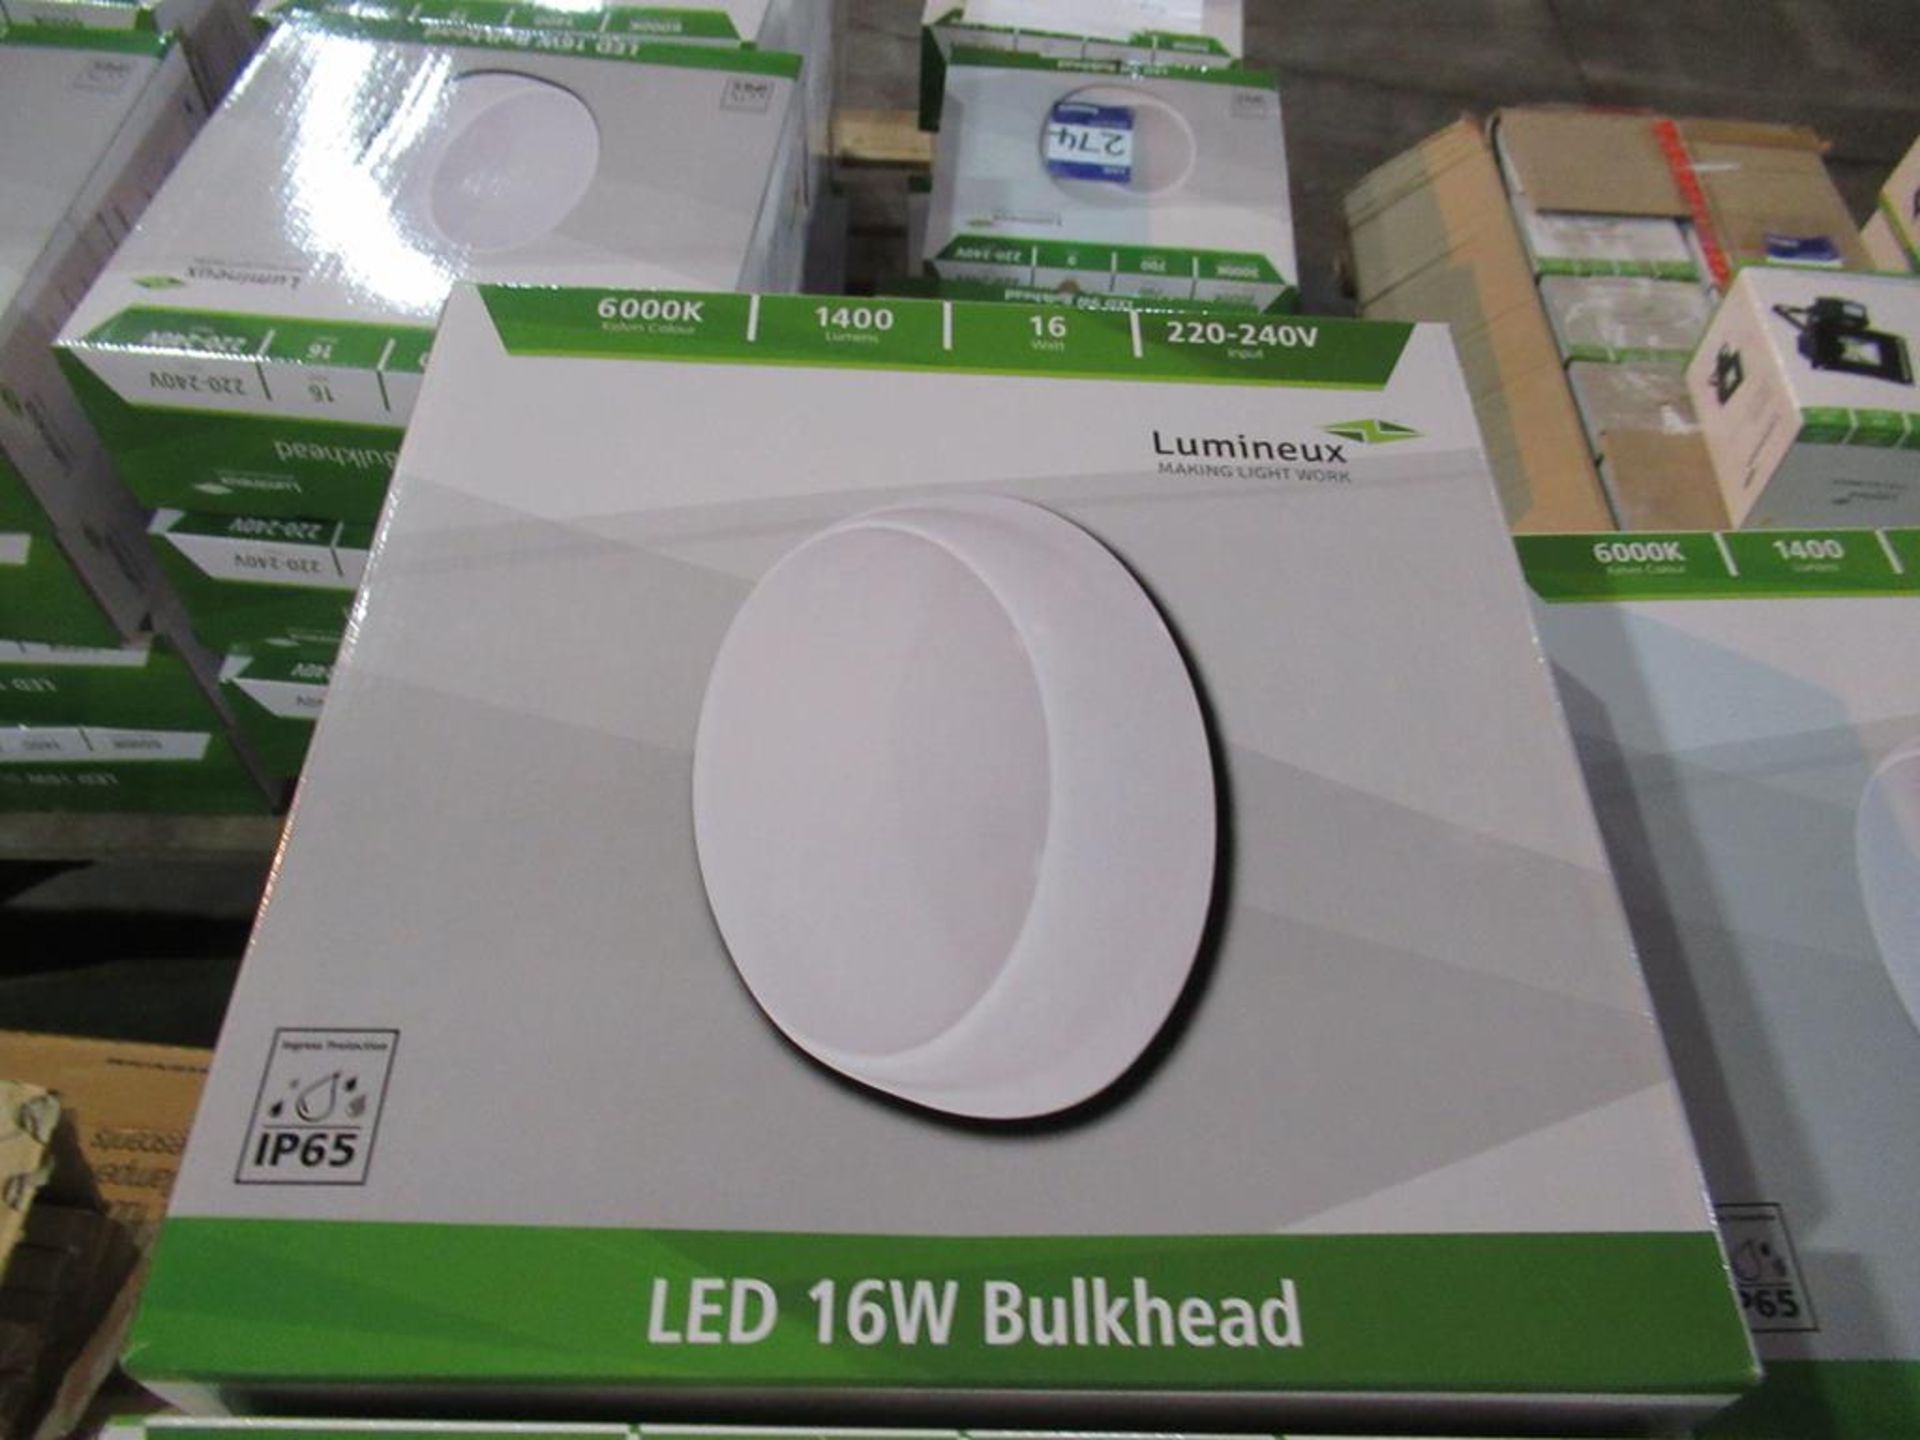 10 x Lumineux 16W LED Bulkhead Step Dim Sensor 6000K OEM Trade Price £ 220 - Image 3 of 3